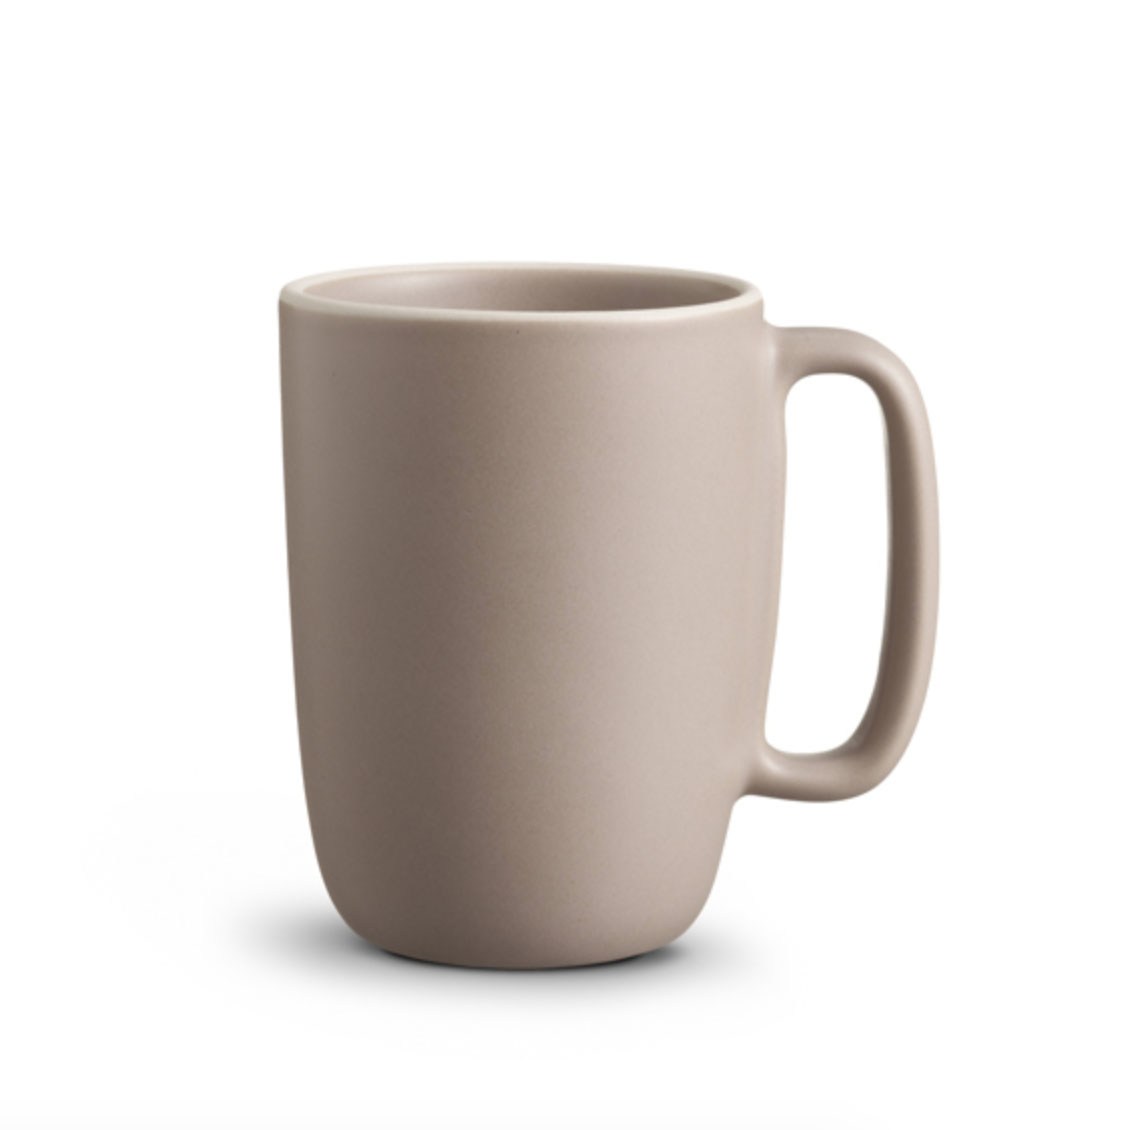 Heath ceramics mug